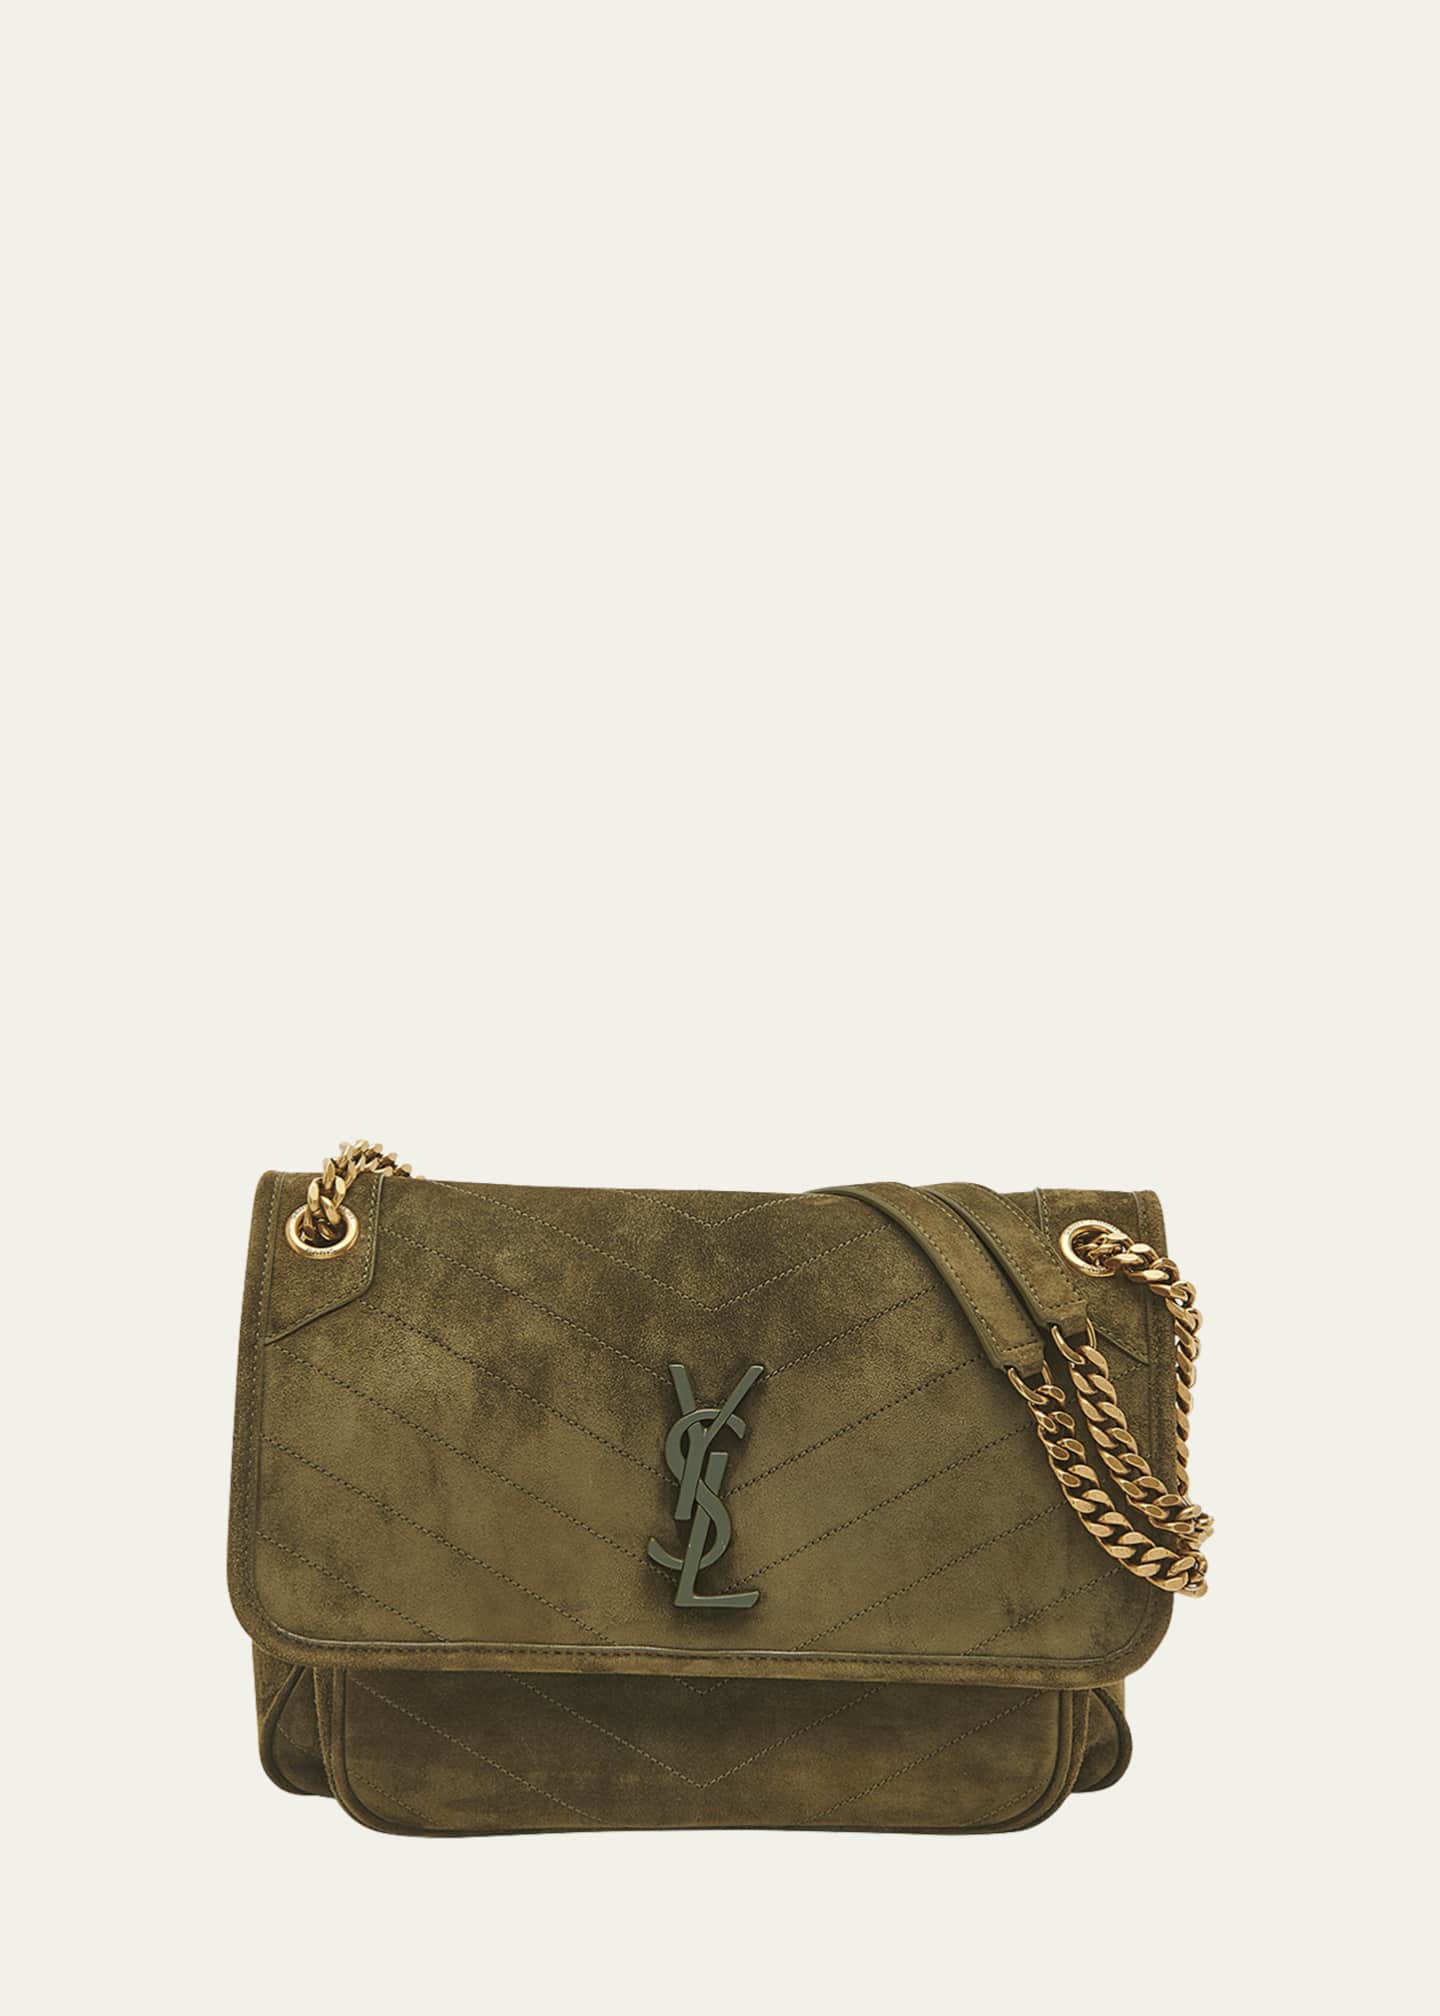 Saint Laurent Medium Monogram Quilted Leather Shoulder Bag